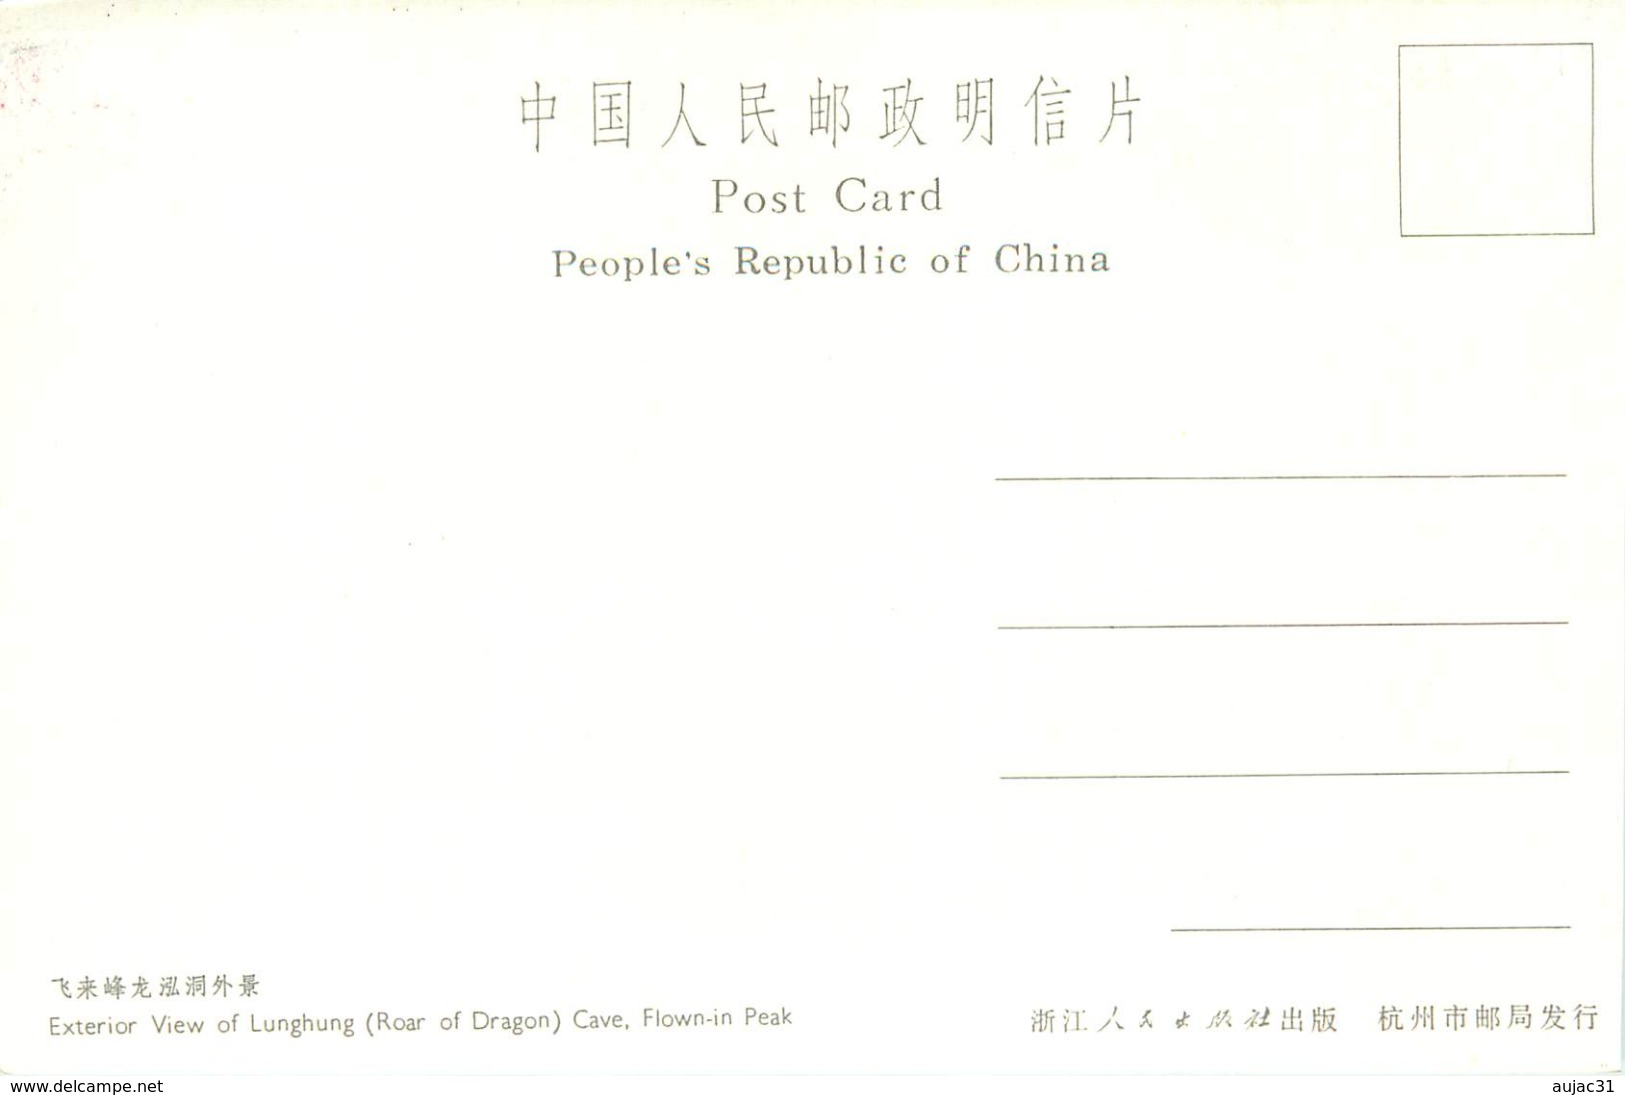 Chine - China - Hangzhou - Religions & croyances - Bouddhisme - Bouddha - Buddha - 12 cartes avec pochette - bon état